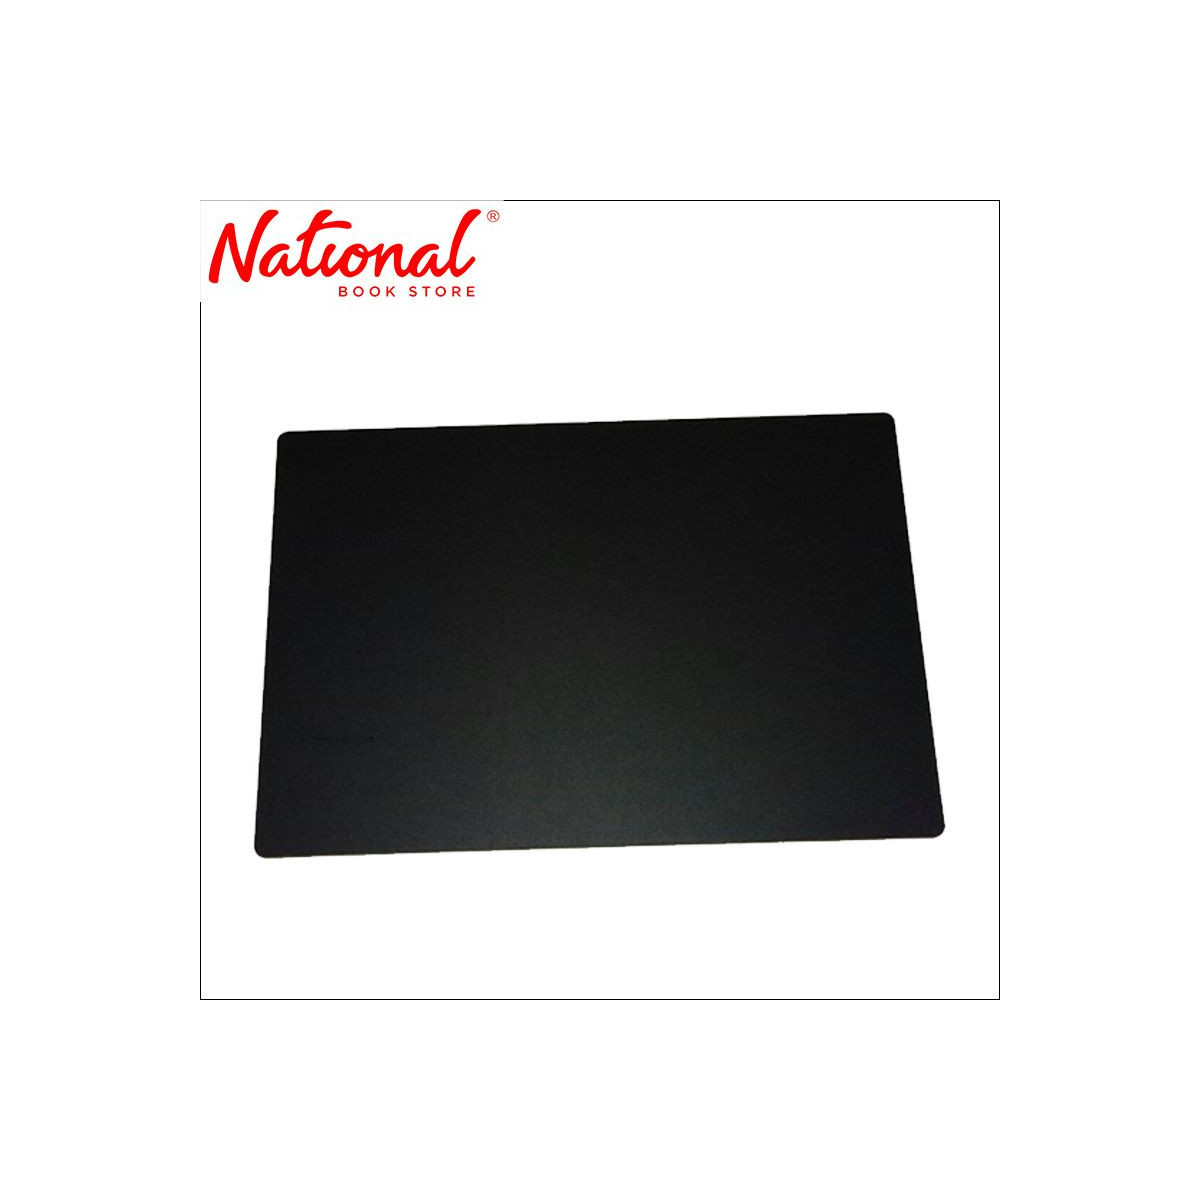 Black Board Double Sided 60X42cm BB3 - School Supplies for Teachers